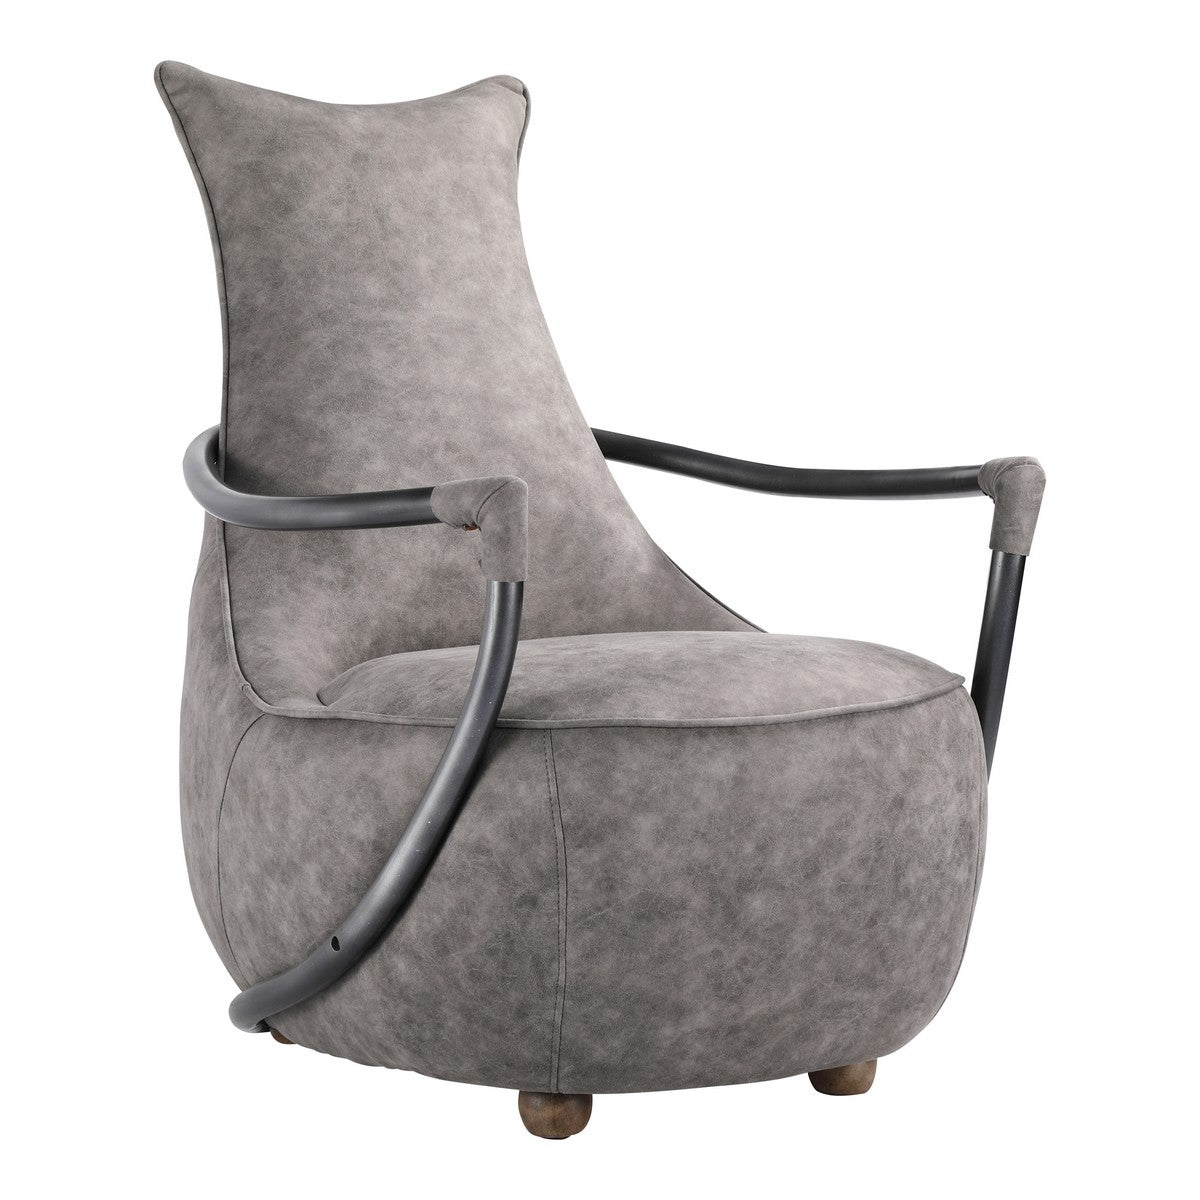 Moe's Home Collection Carlisle Club Chair Grey Velvet - PK-1026-15